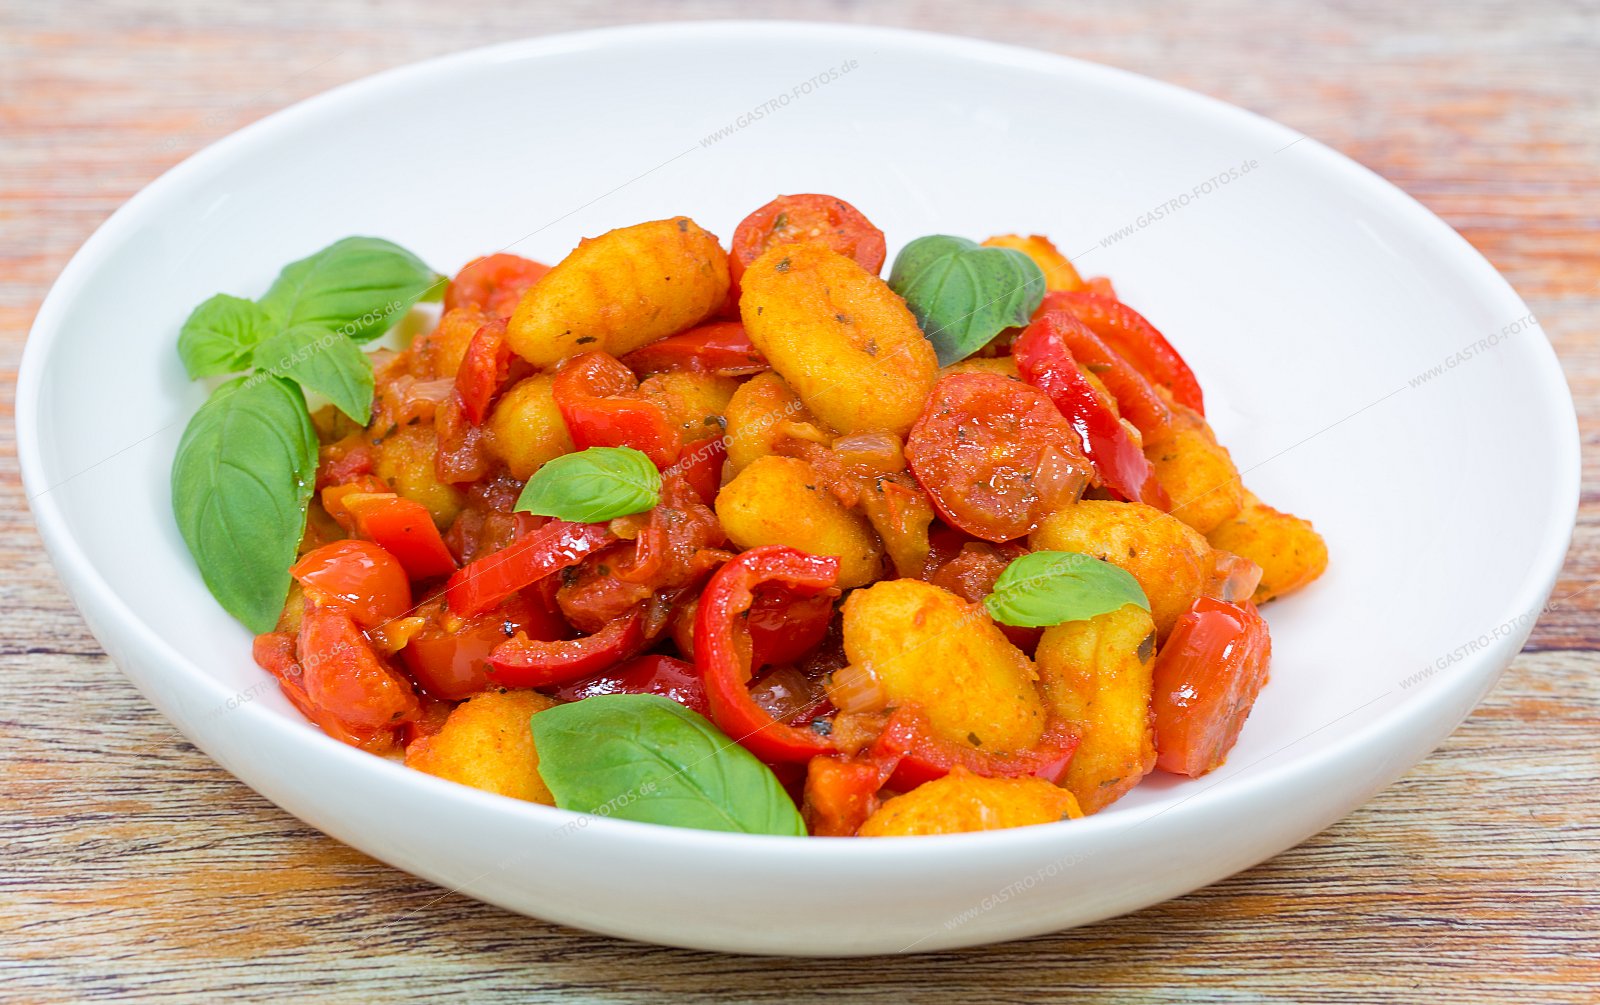 Gnocchi in Paprika-Tomatensauce - Nudelgerichte mit Sauce